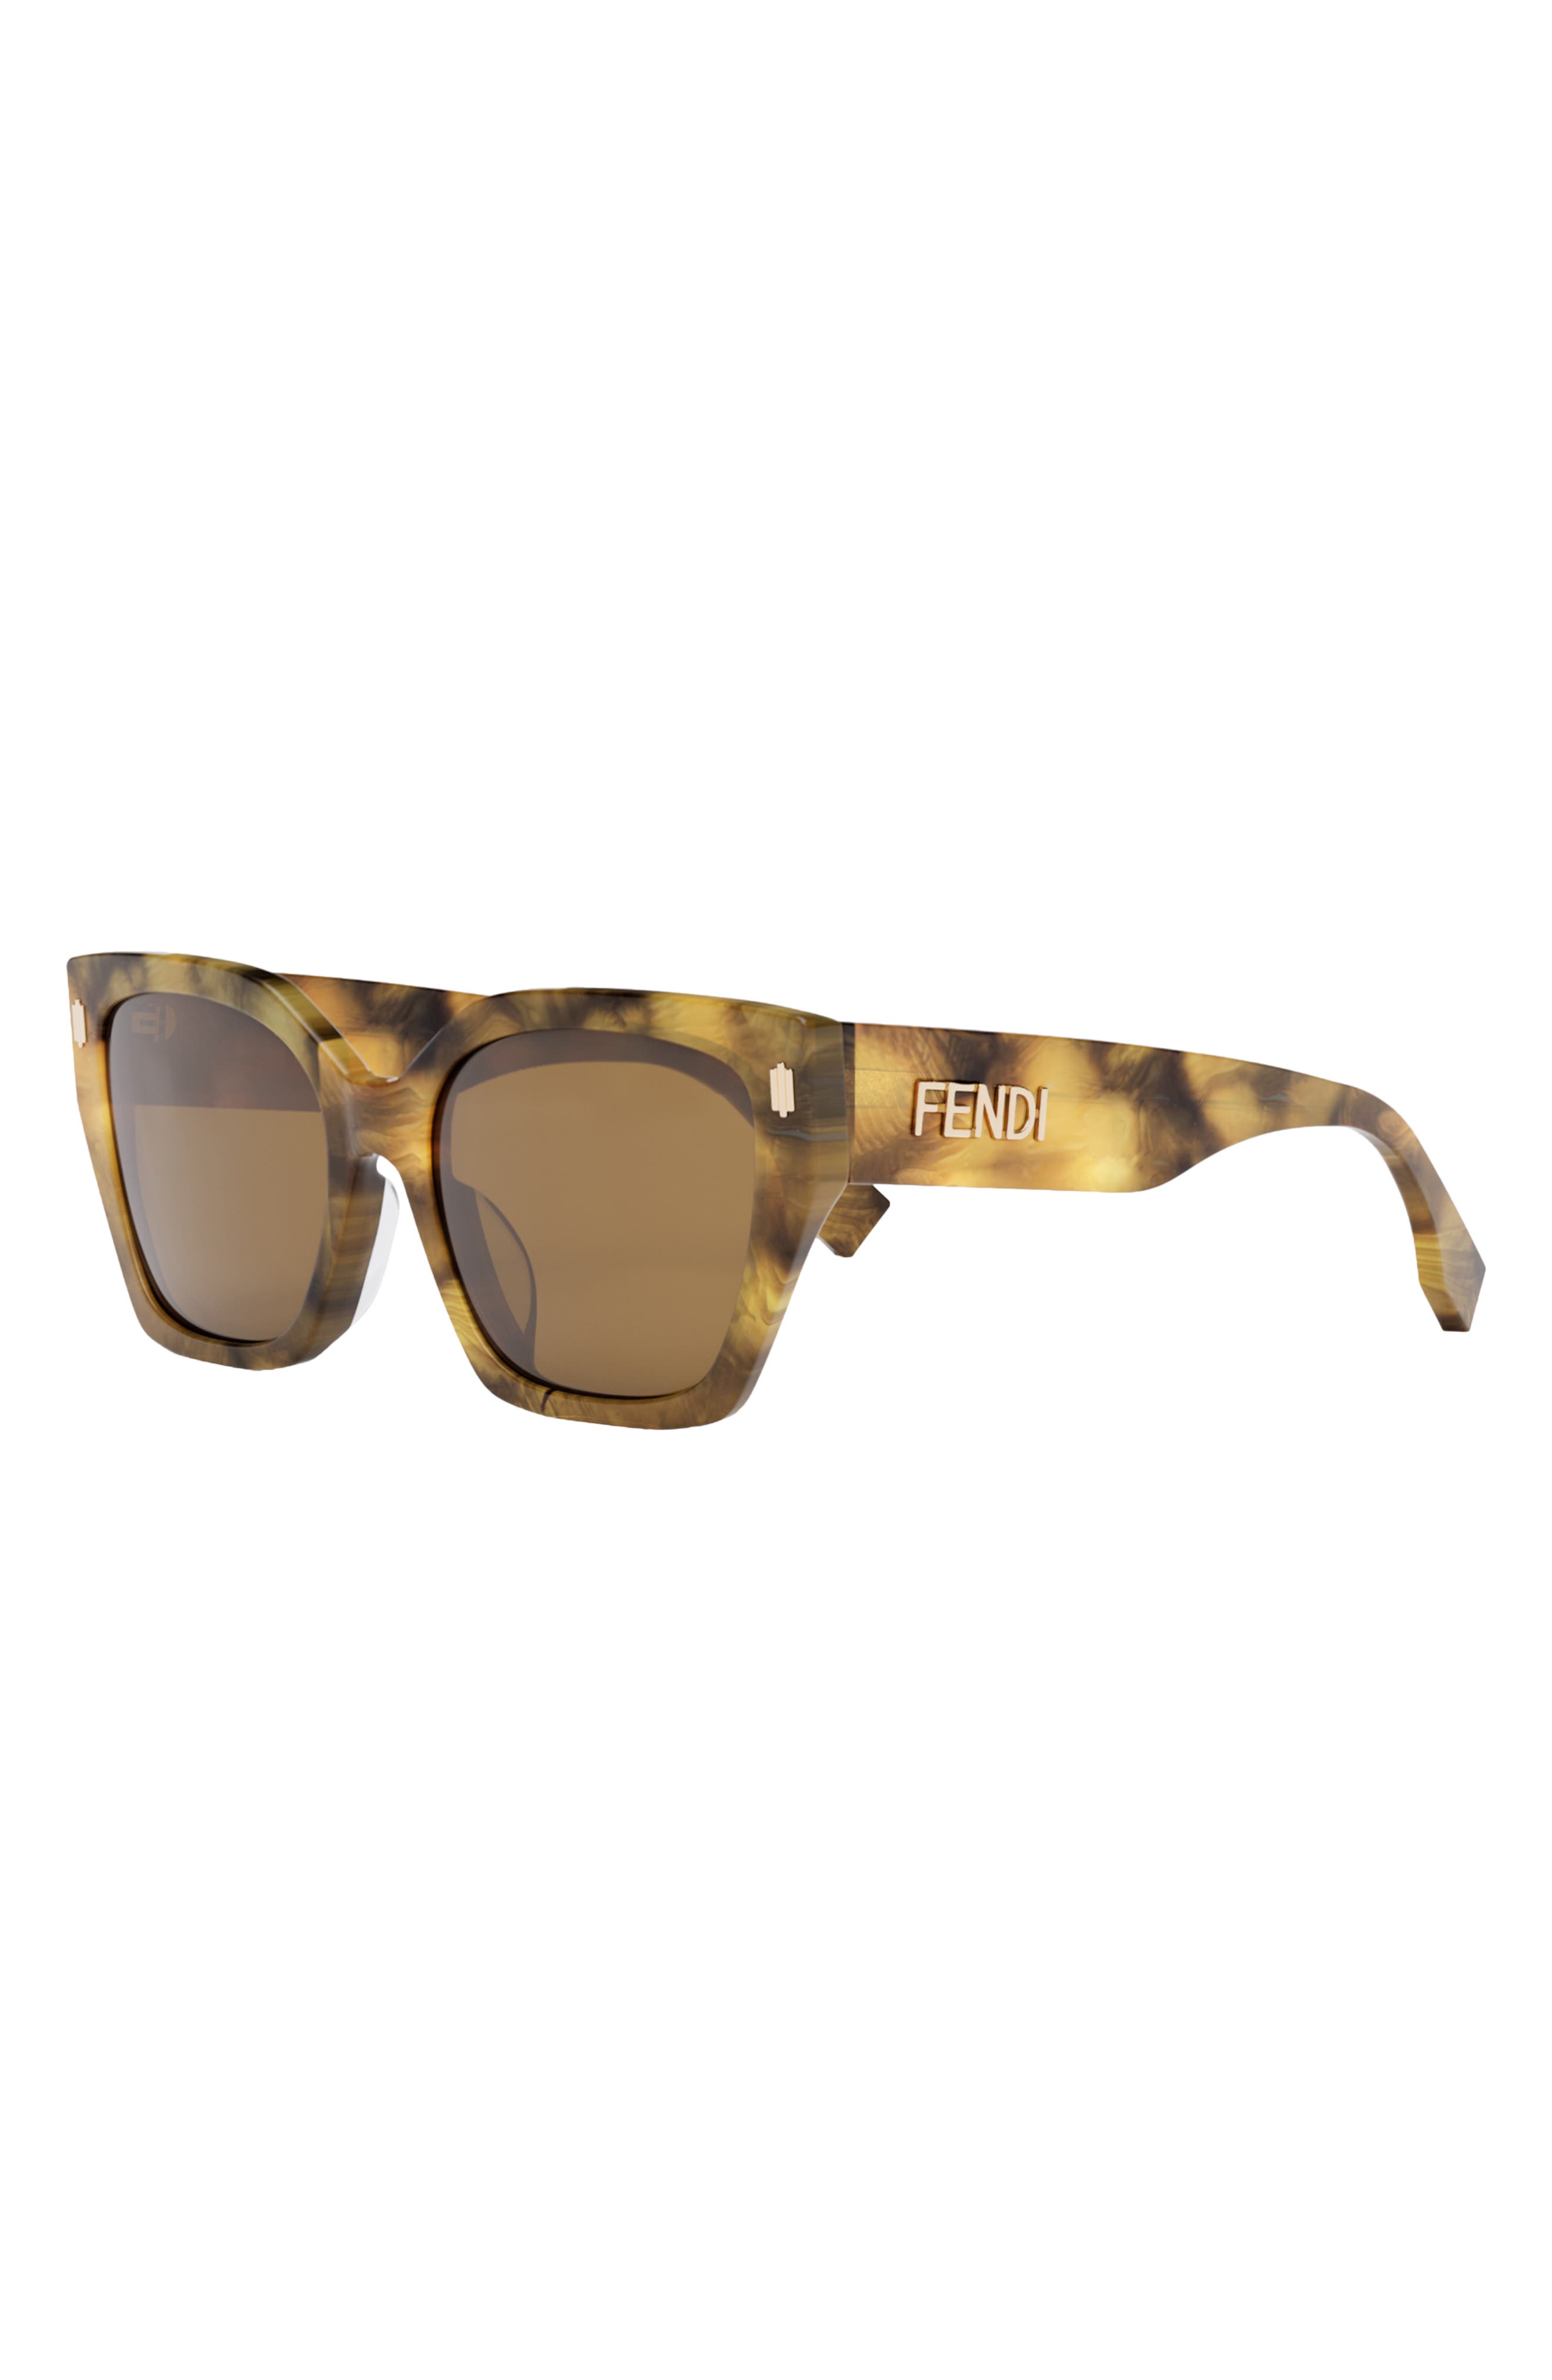 Fendi Fendi Bold FF Havana and Black Acetate Sunglasses